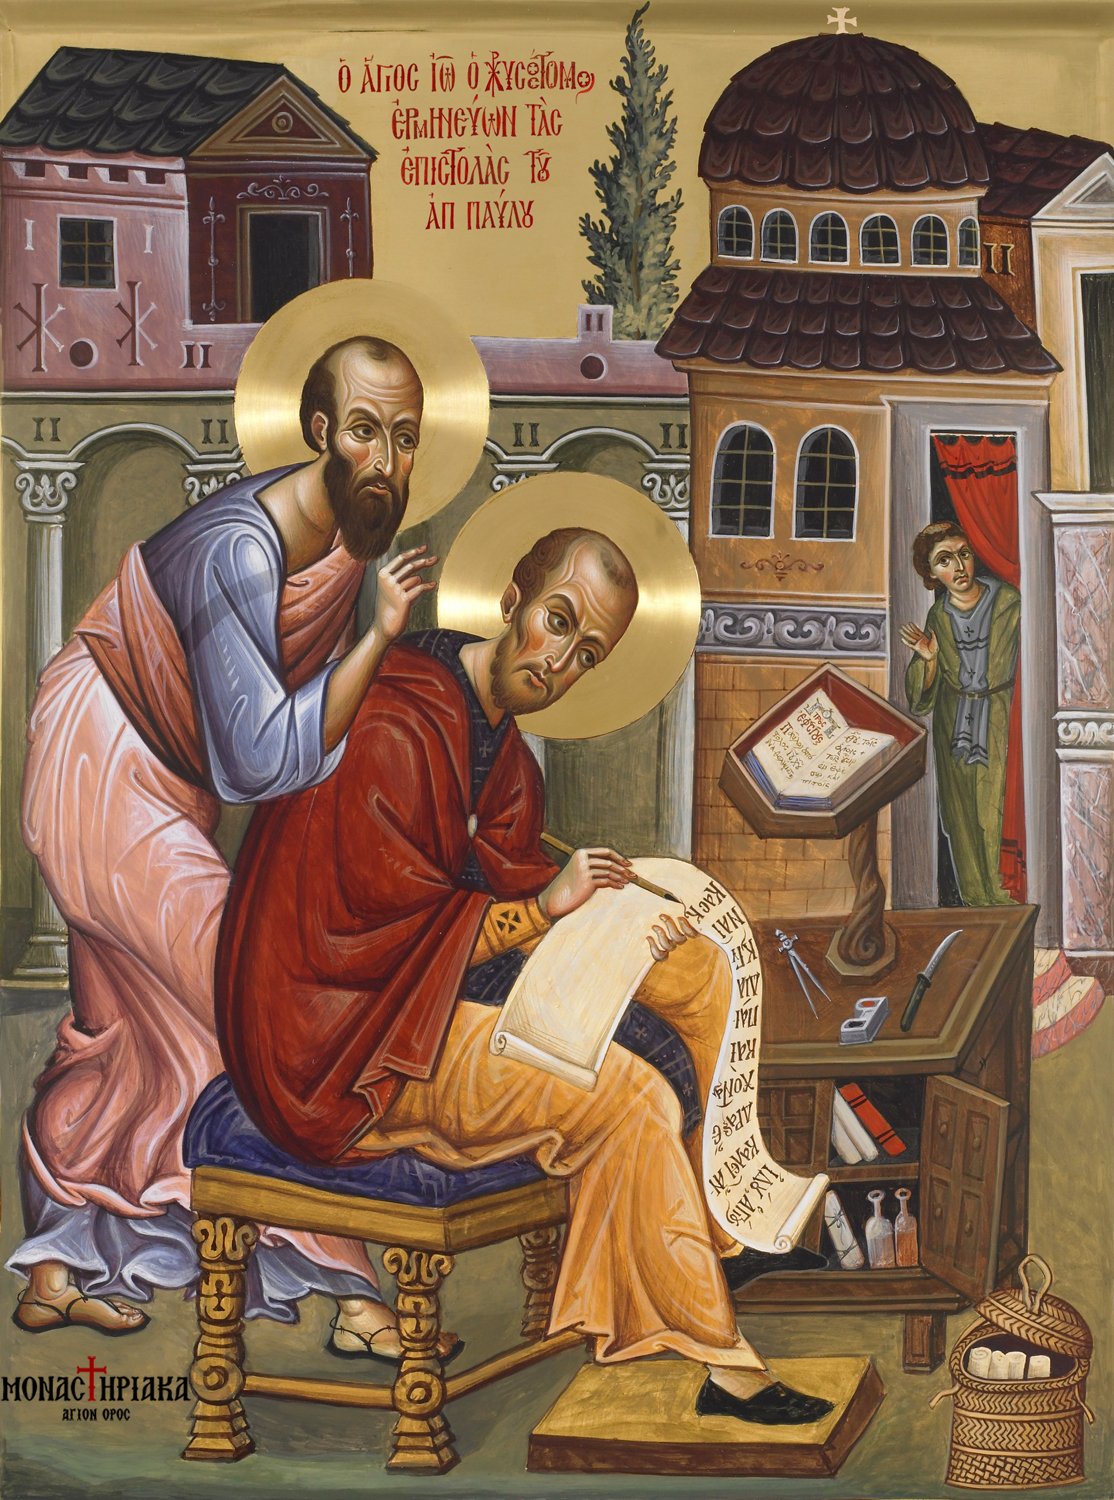 Saint John Chrysostom reading the writings of Apostle Paul